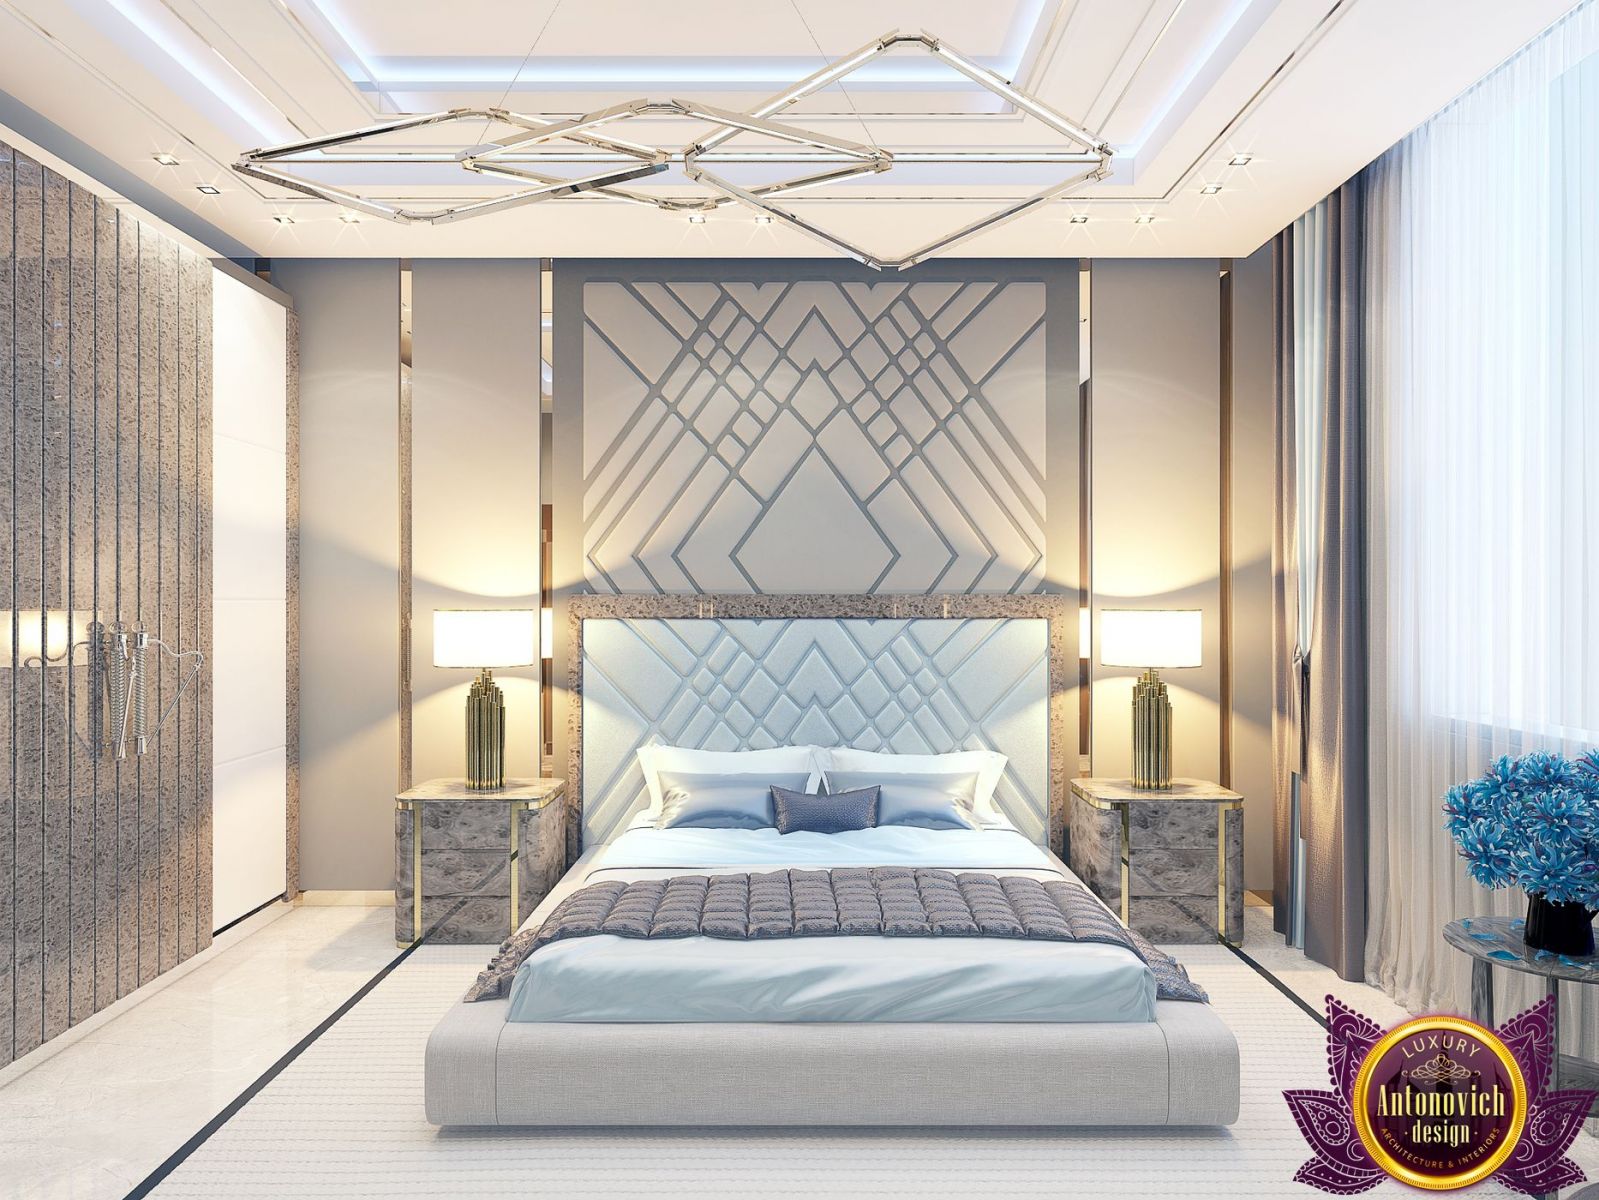 Sleek and stylish modern bedroom with bold artwork